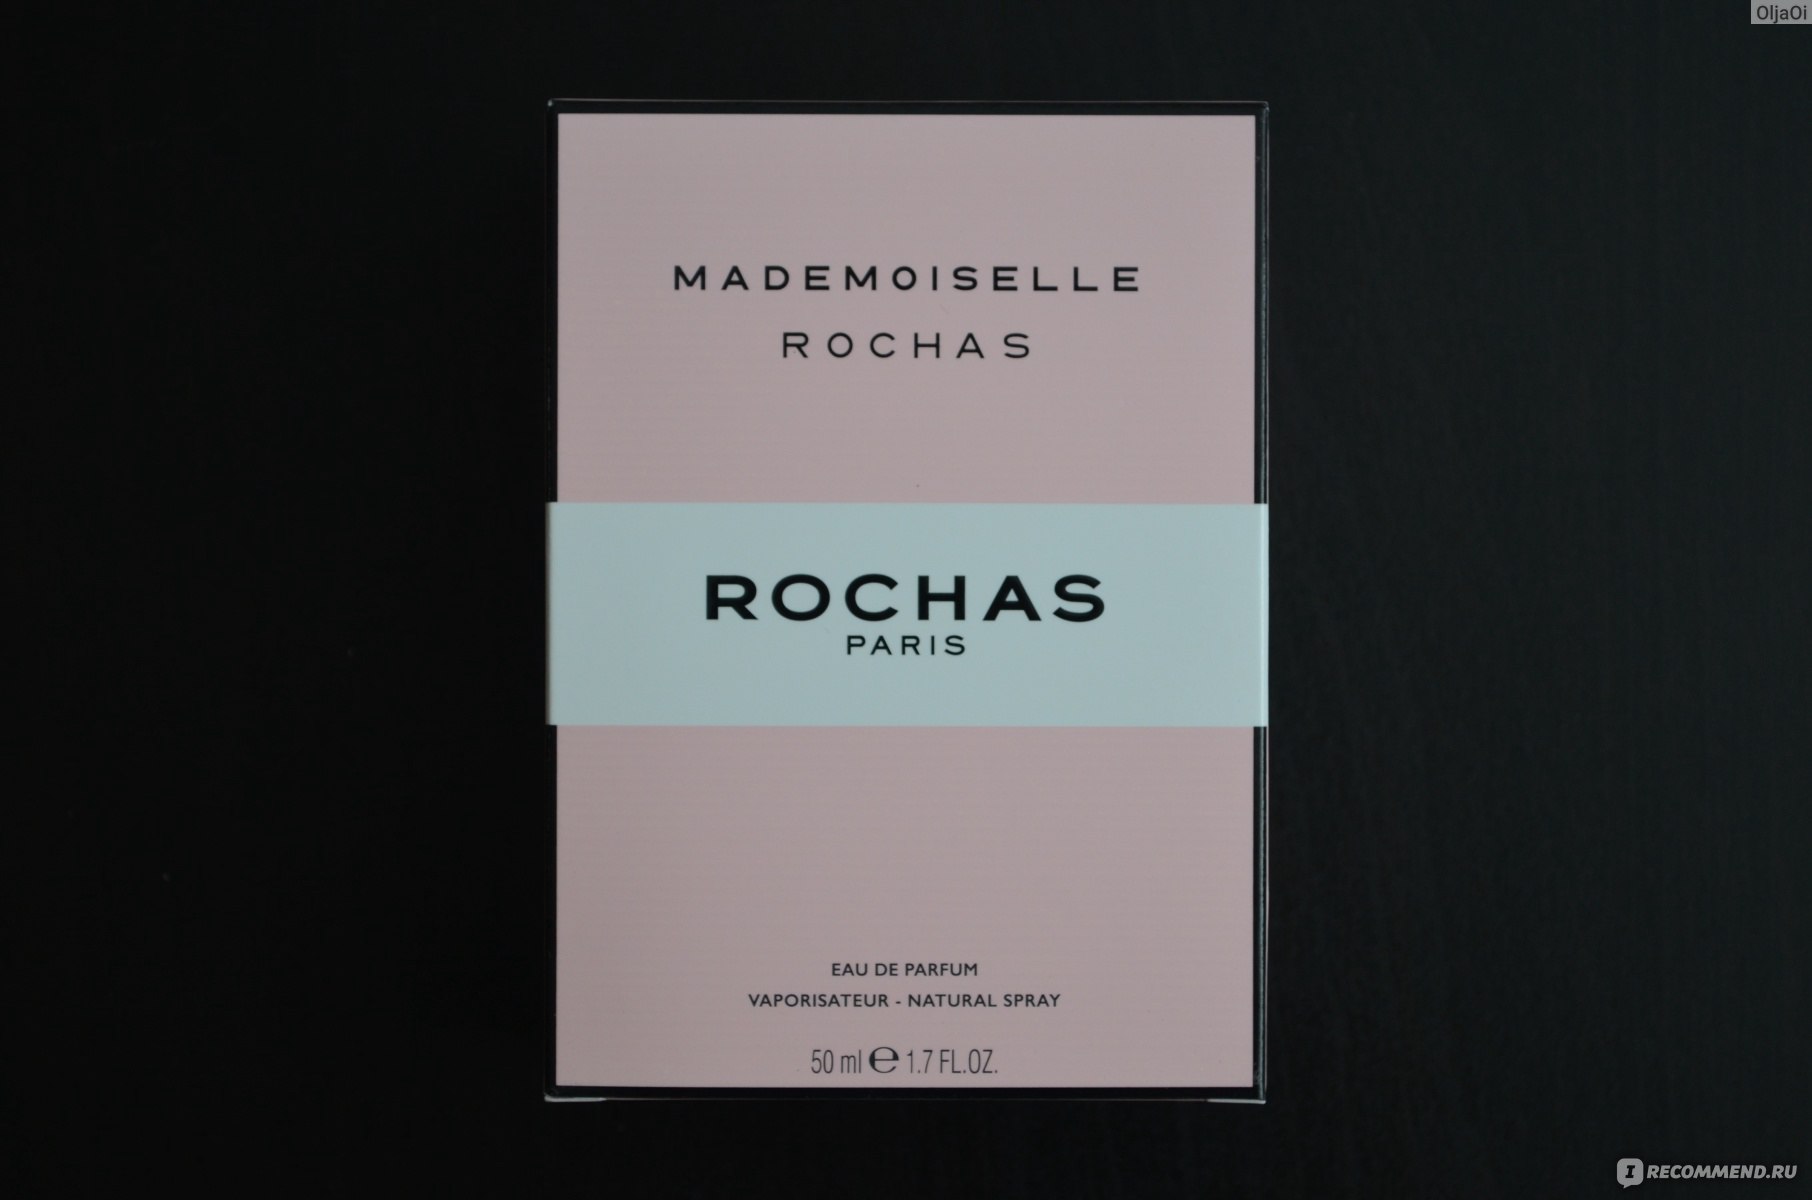 Rochas mademoiselle rochas отзывы